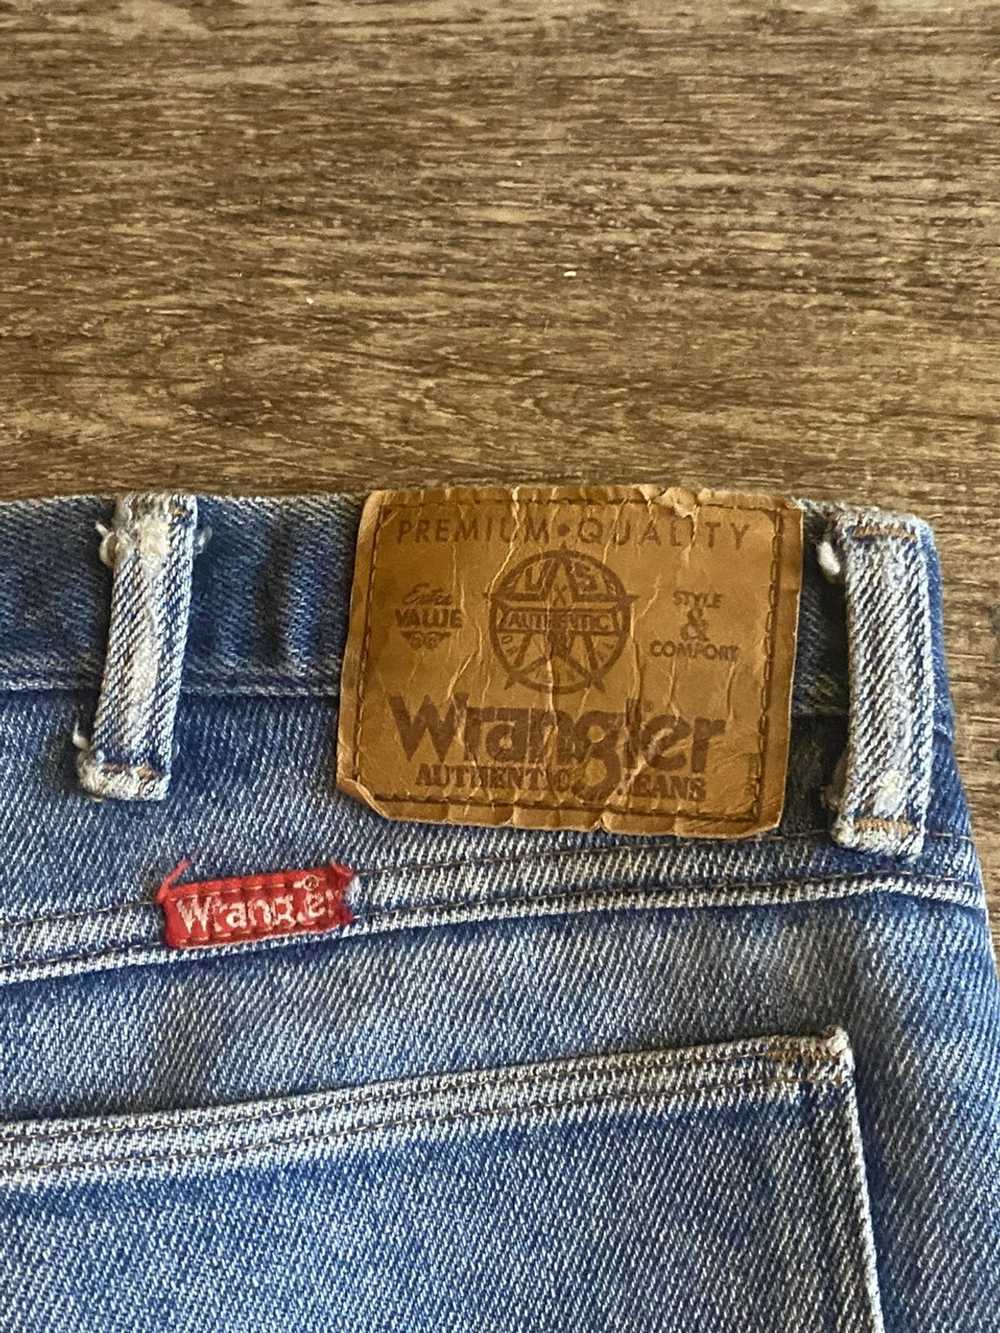 Vintage × Wrangler 90s Vintage Wrangler Jeans - image 3